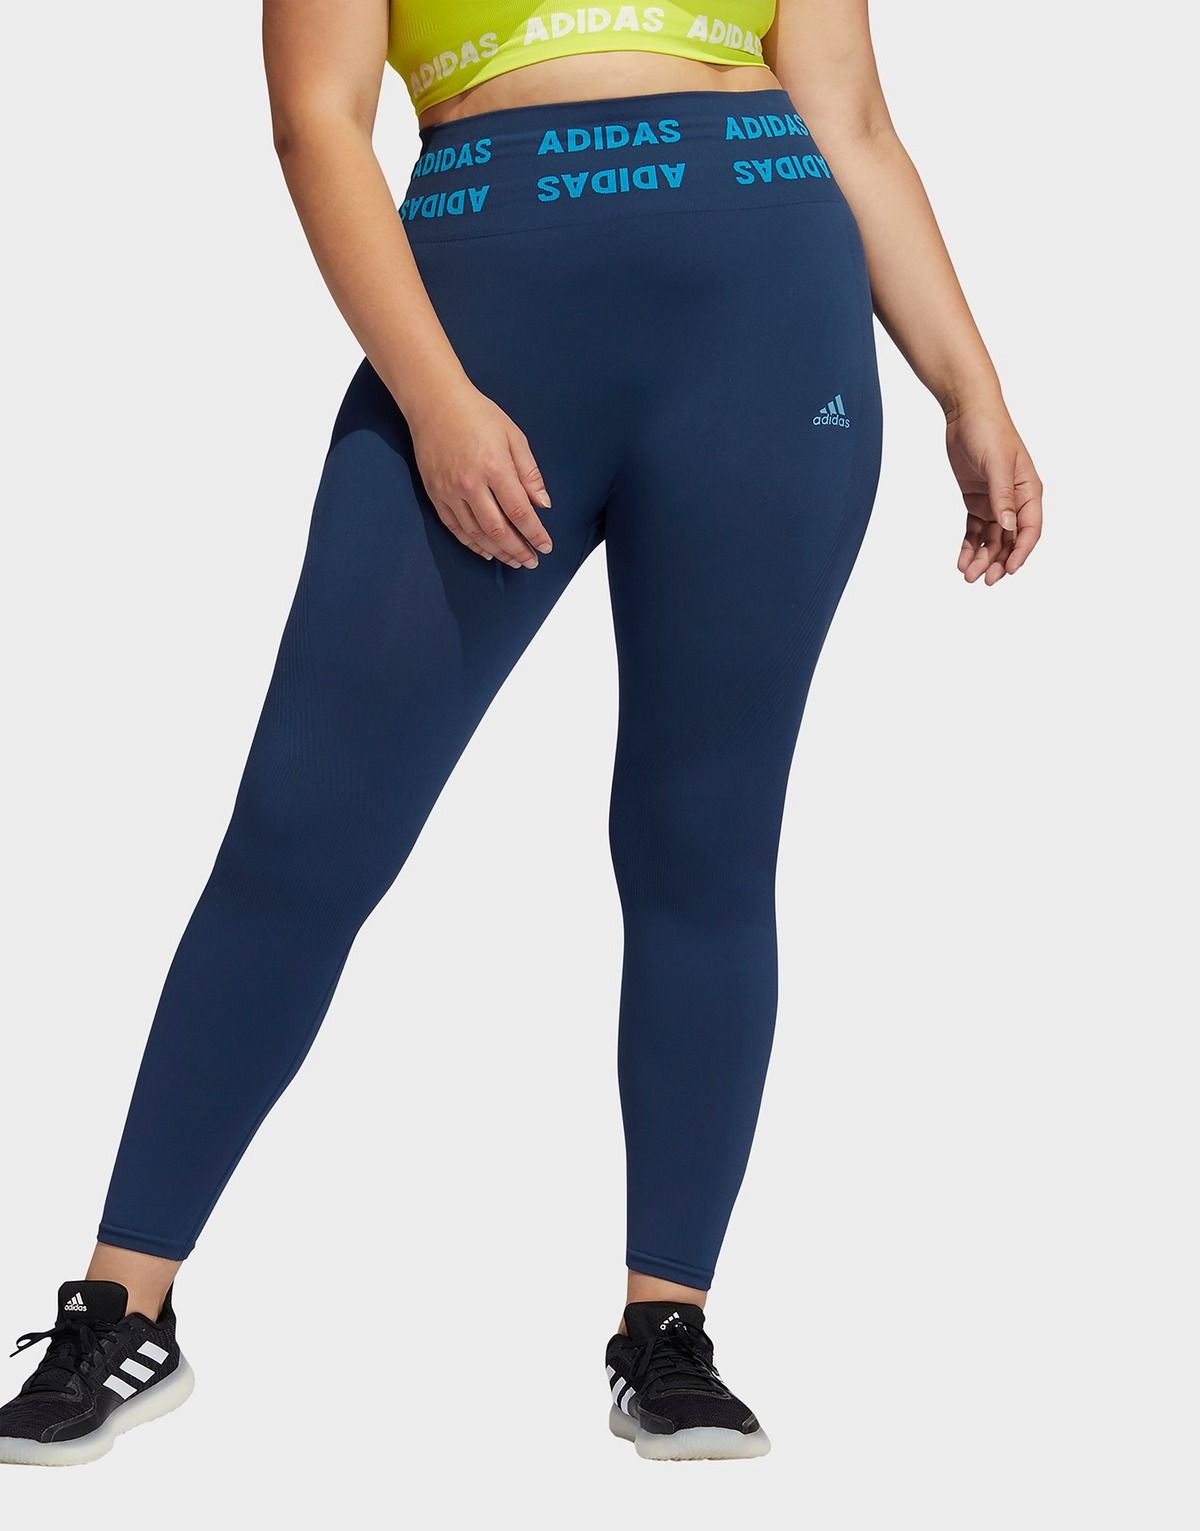 adidas gym leggings